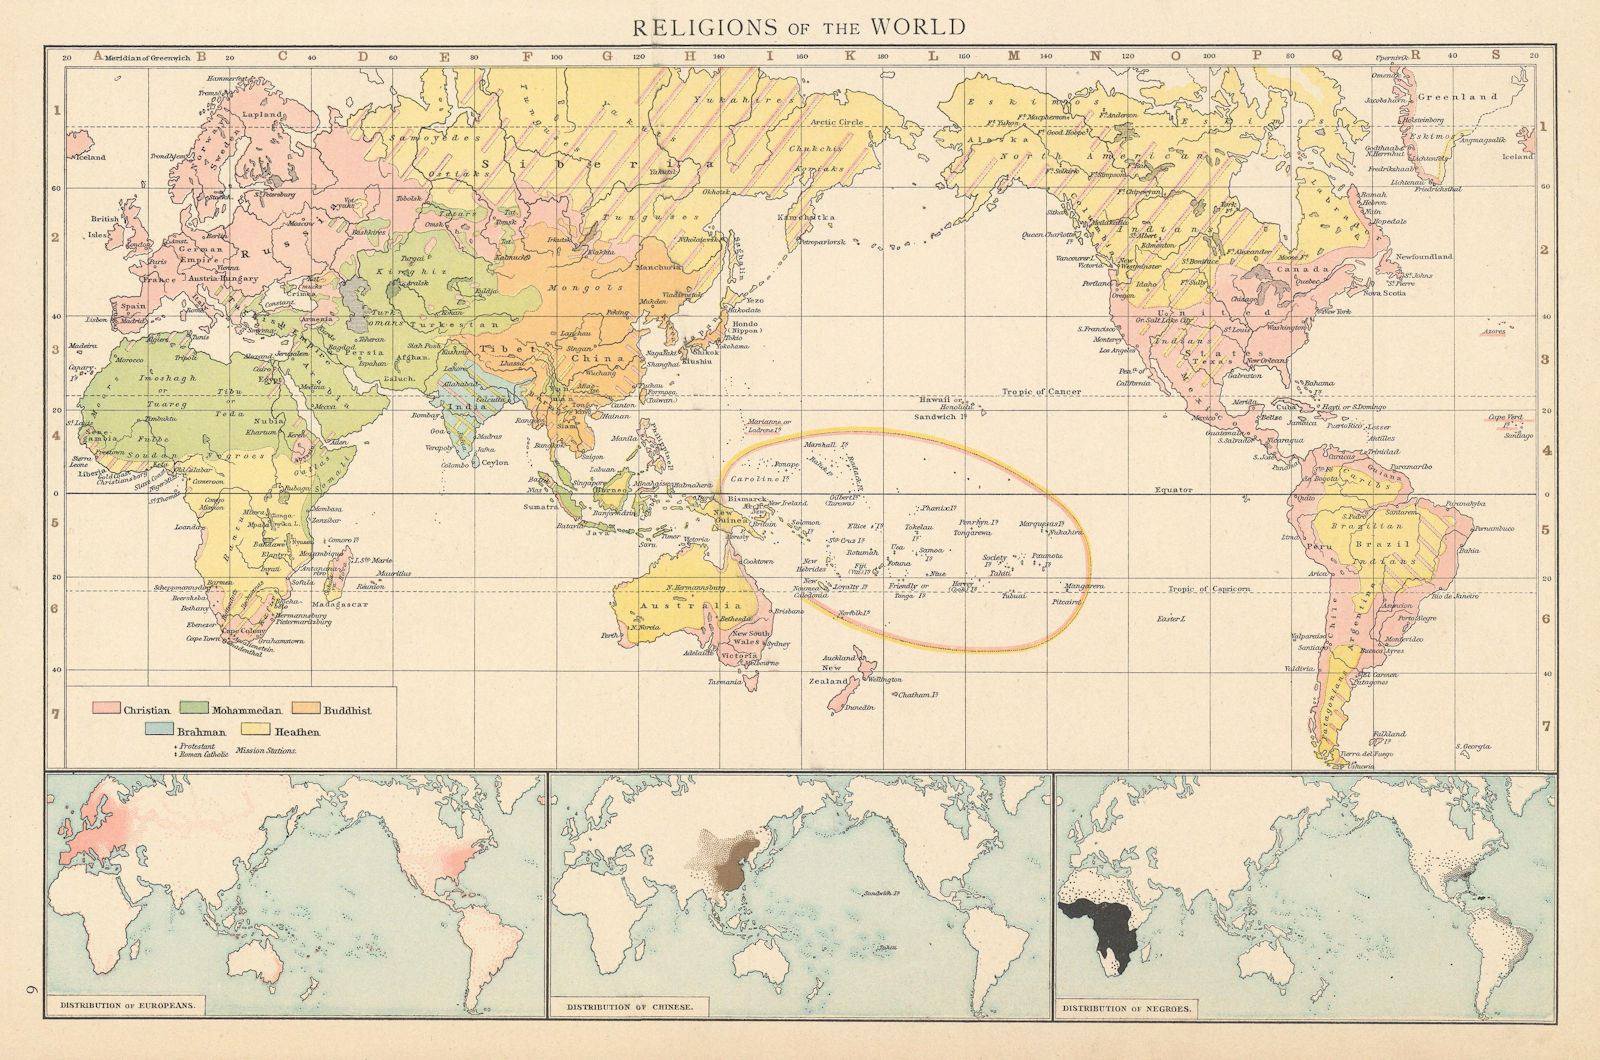 Religions of the world. Christian Islam Buddhist Heathen Hindu. TIMES 1895 map